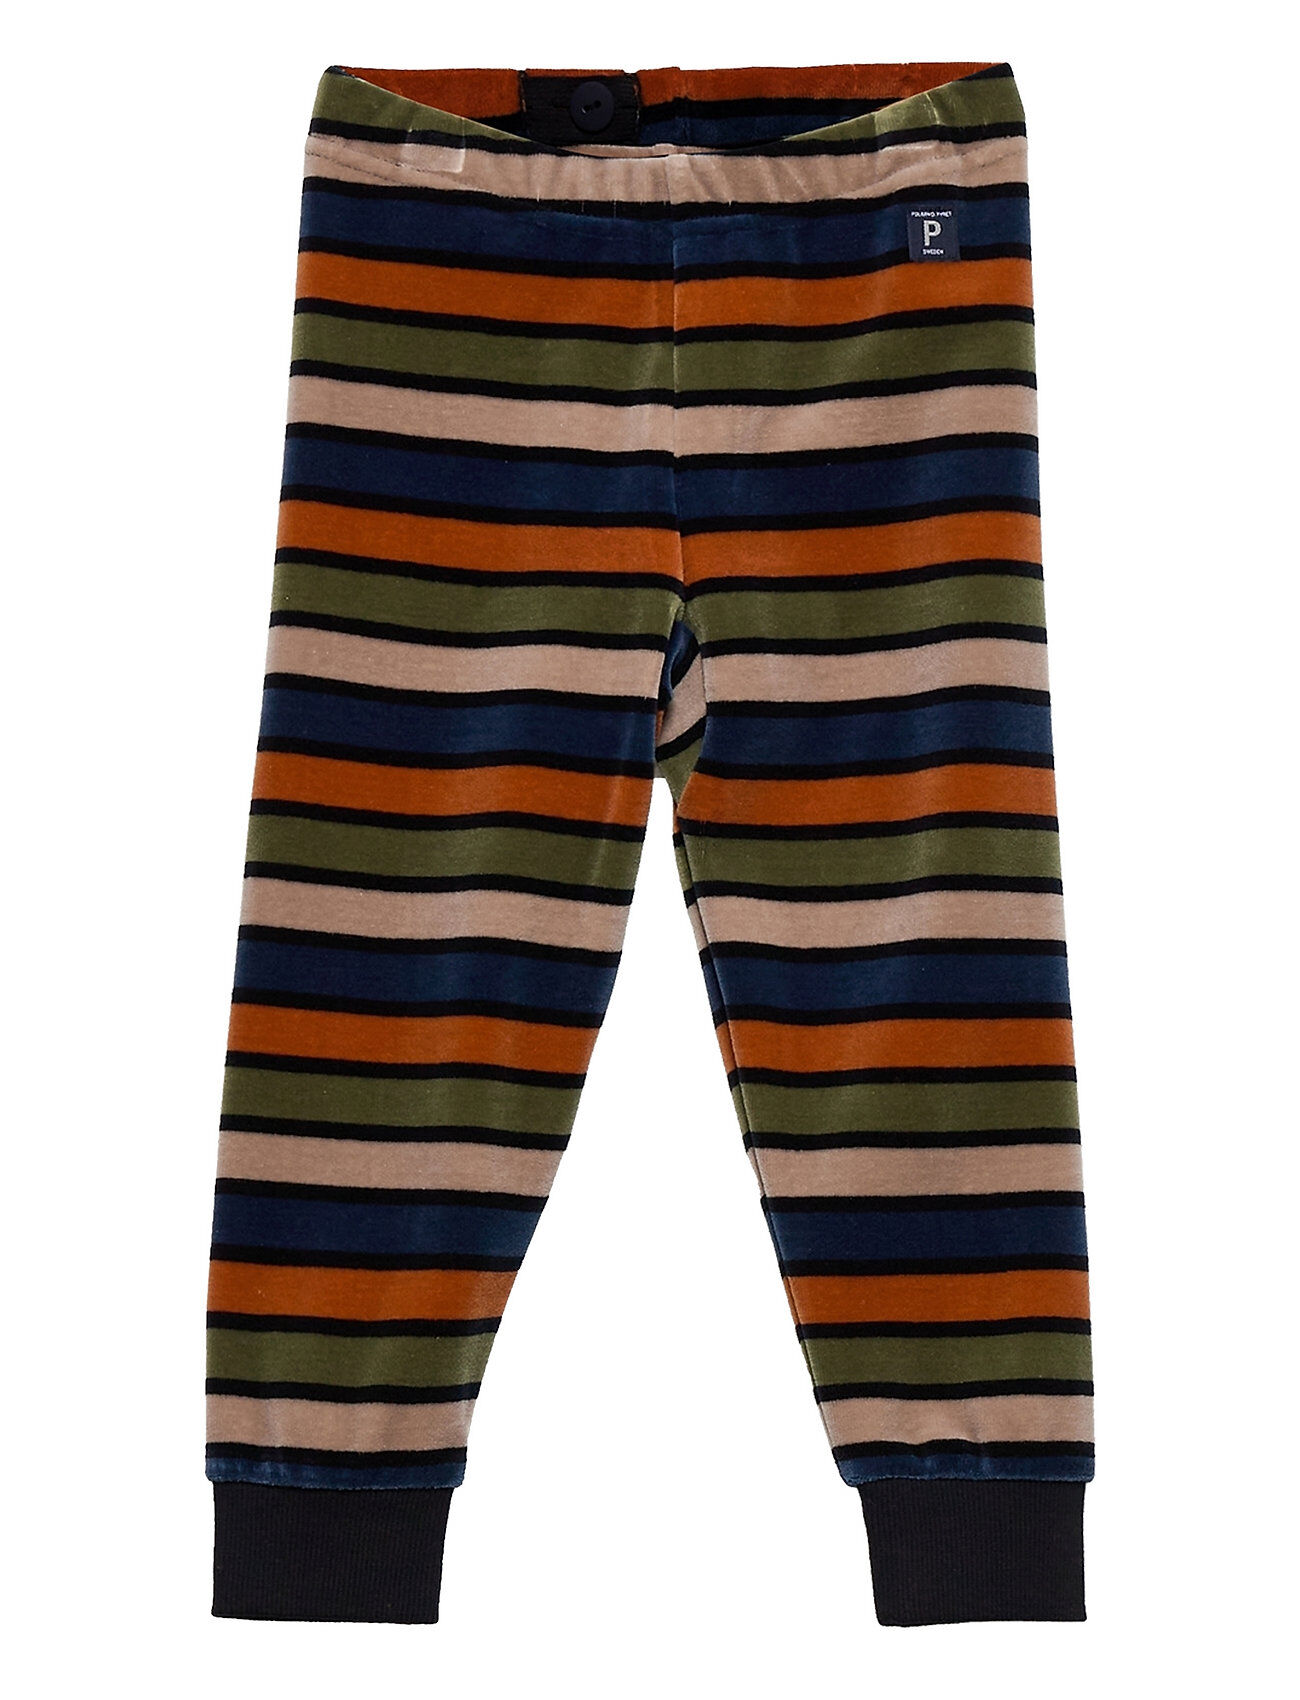 Polarn O. Pyret Trousers Velour Striped Preschool Joggebukser Pysjbukser Multi/mønstret Polarn O. Pyret